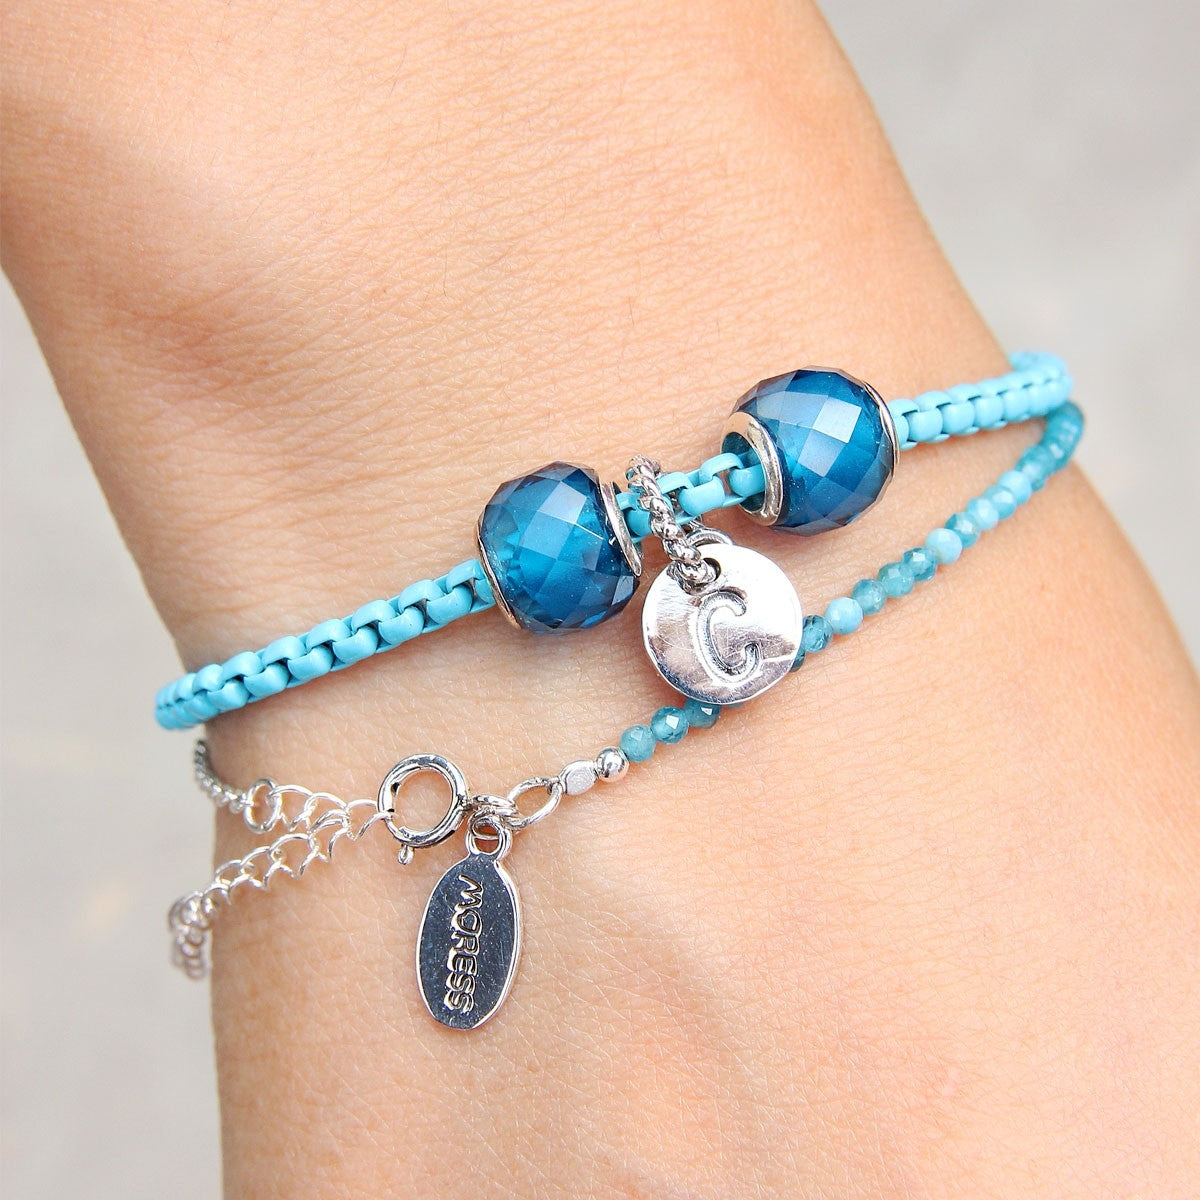 Blue Lush Pop bracelet